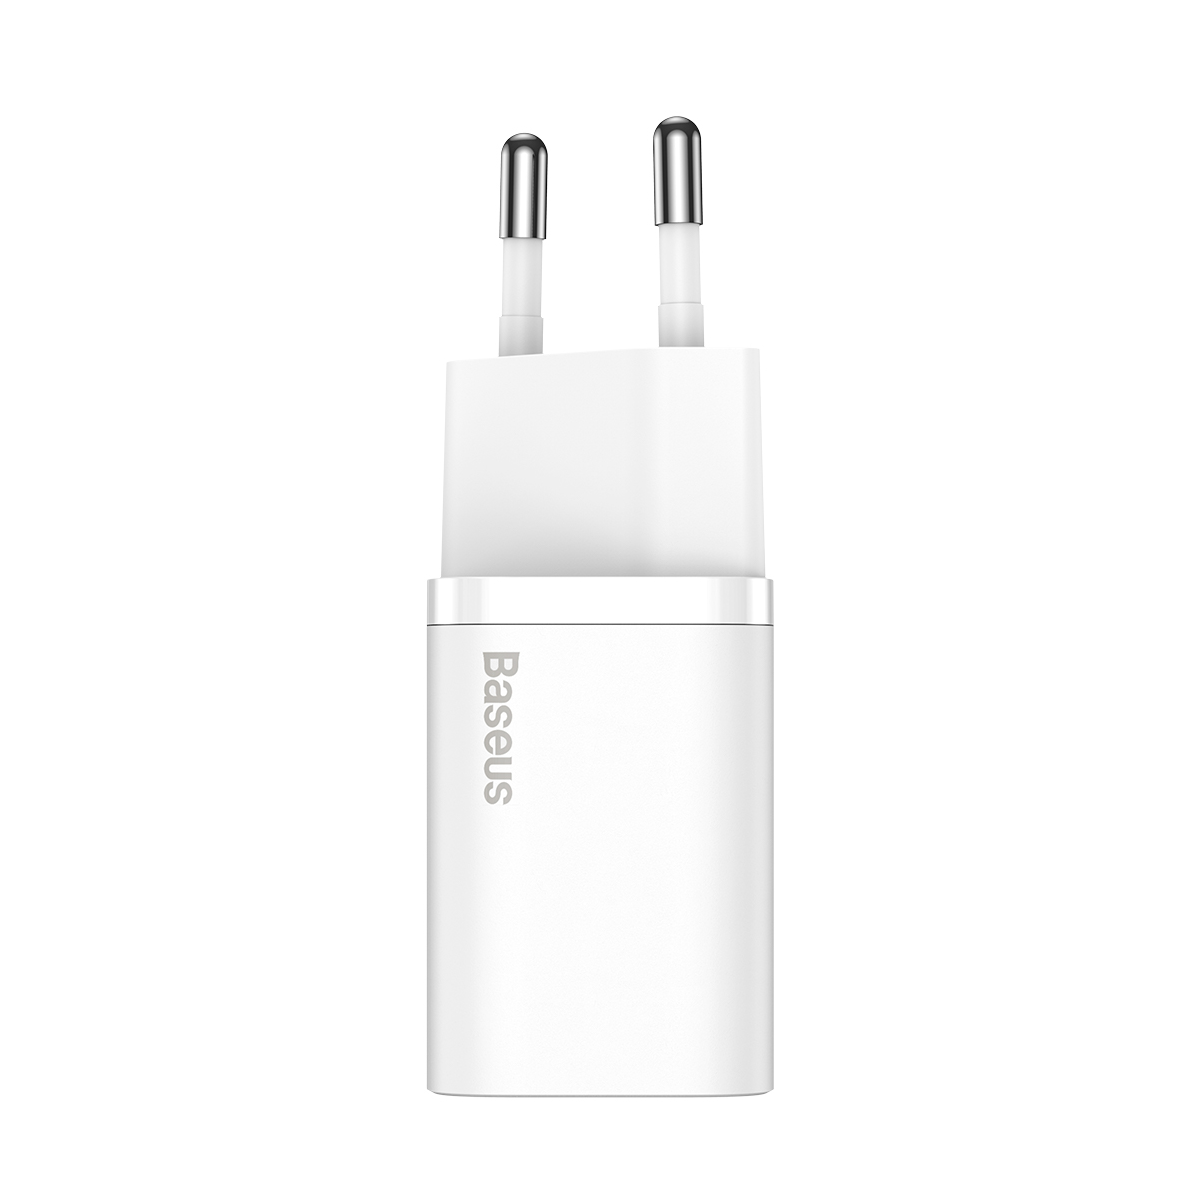 Сетевое зарядное устройство Baseus Super Si 1C USB Type C 30 W Power Delivery Quick Charge (CCSUP-J02) White